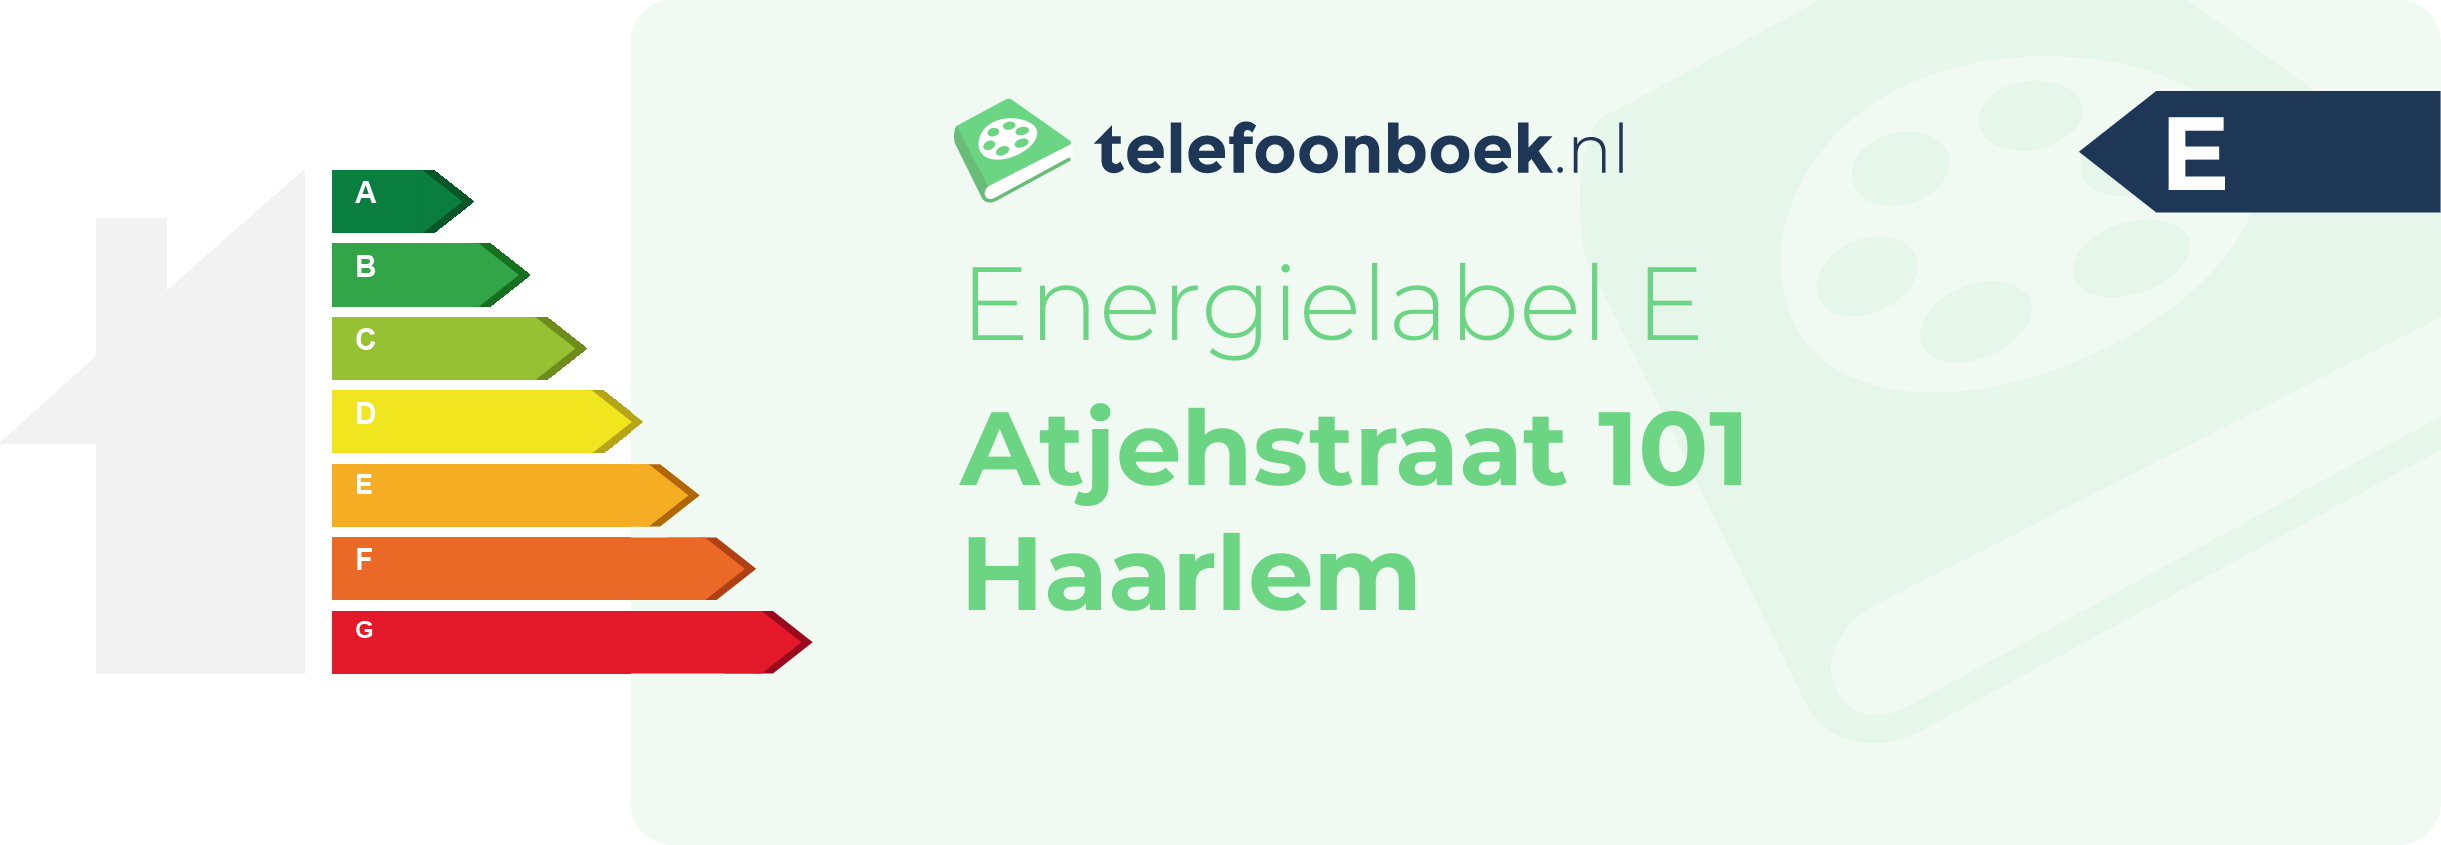 Energielabel Atjehstraat 101 Haarlem